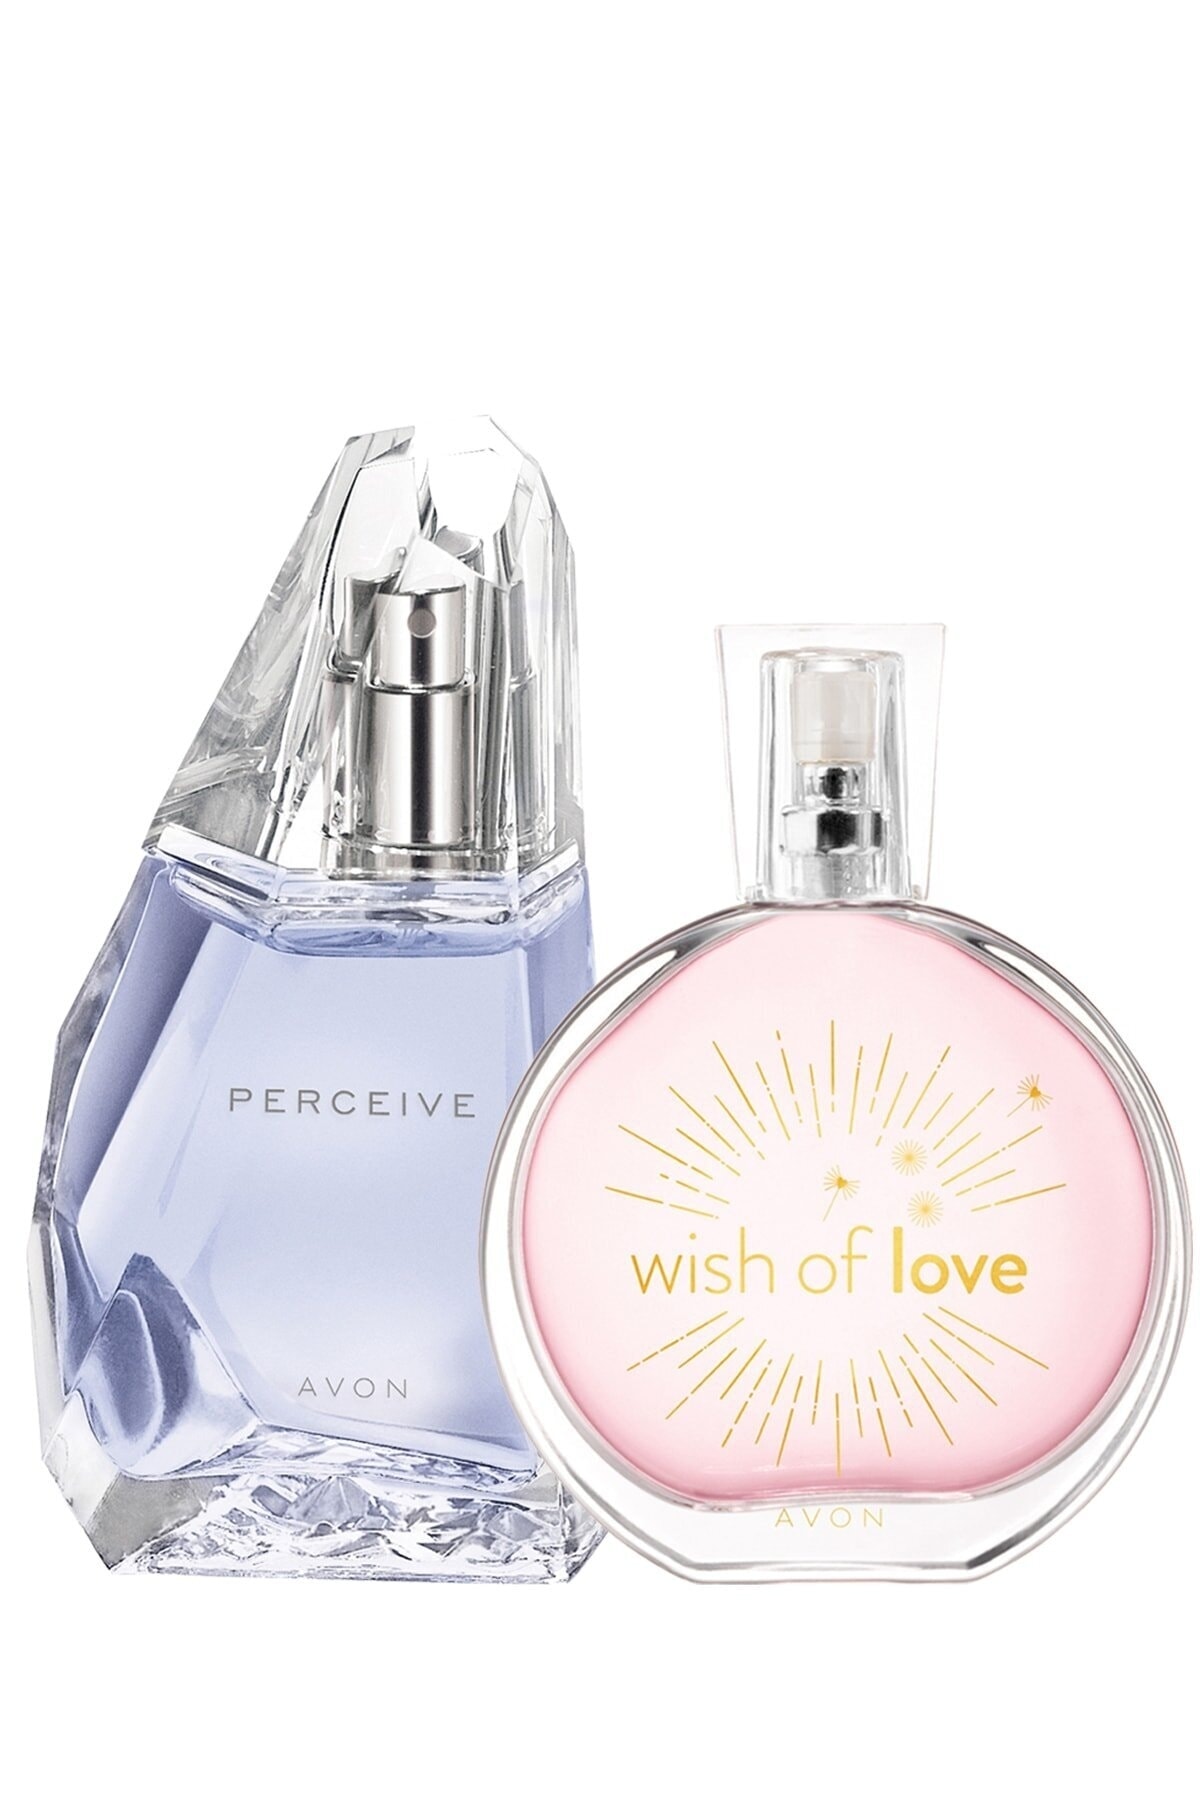 AVON Wish Of Love Ve Perceive Kadın Parfüm Paketi